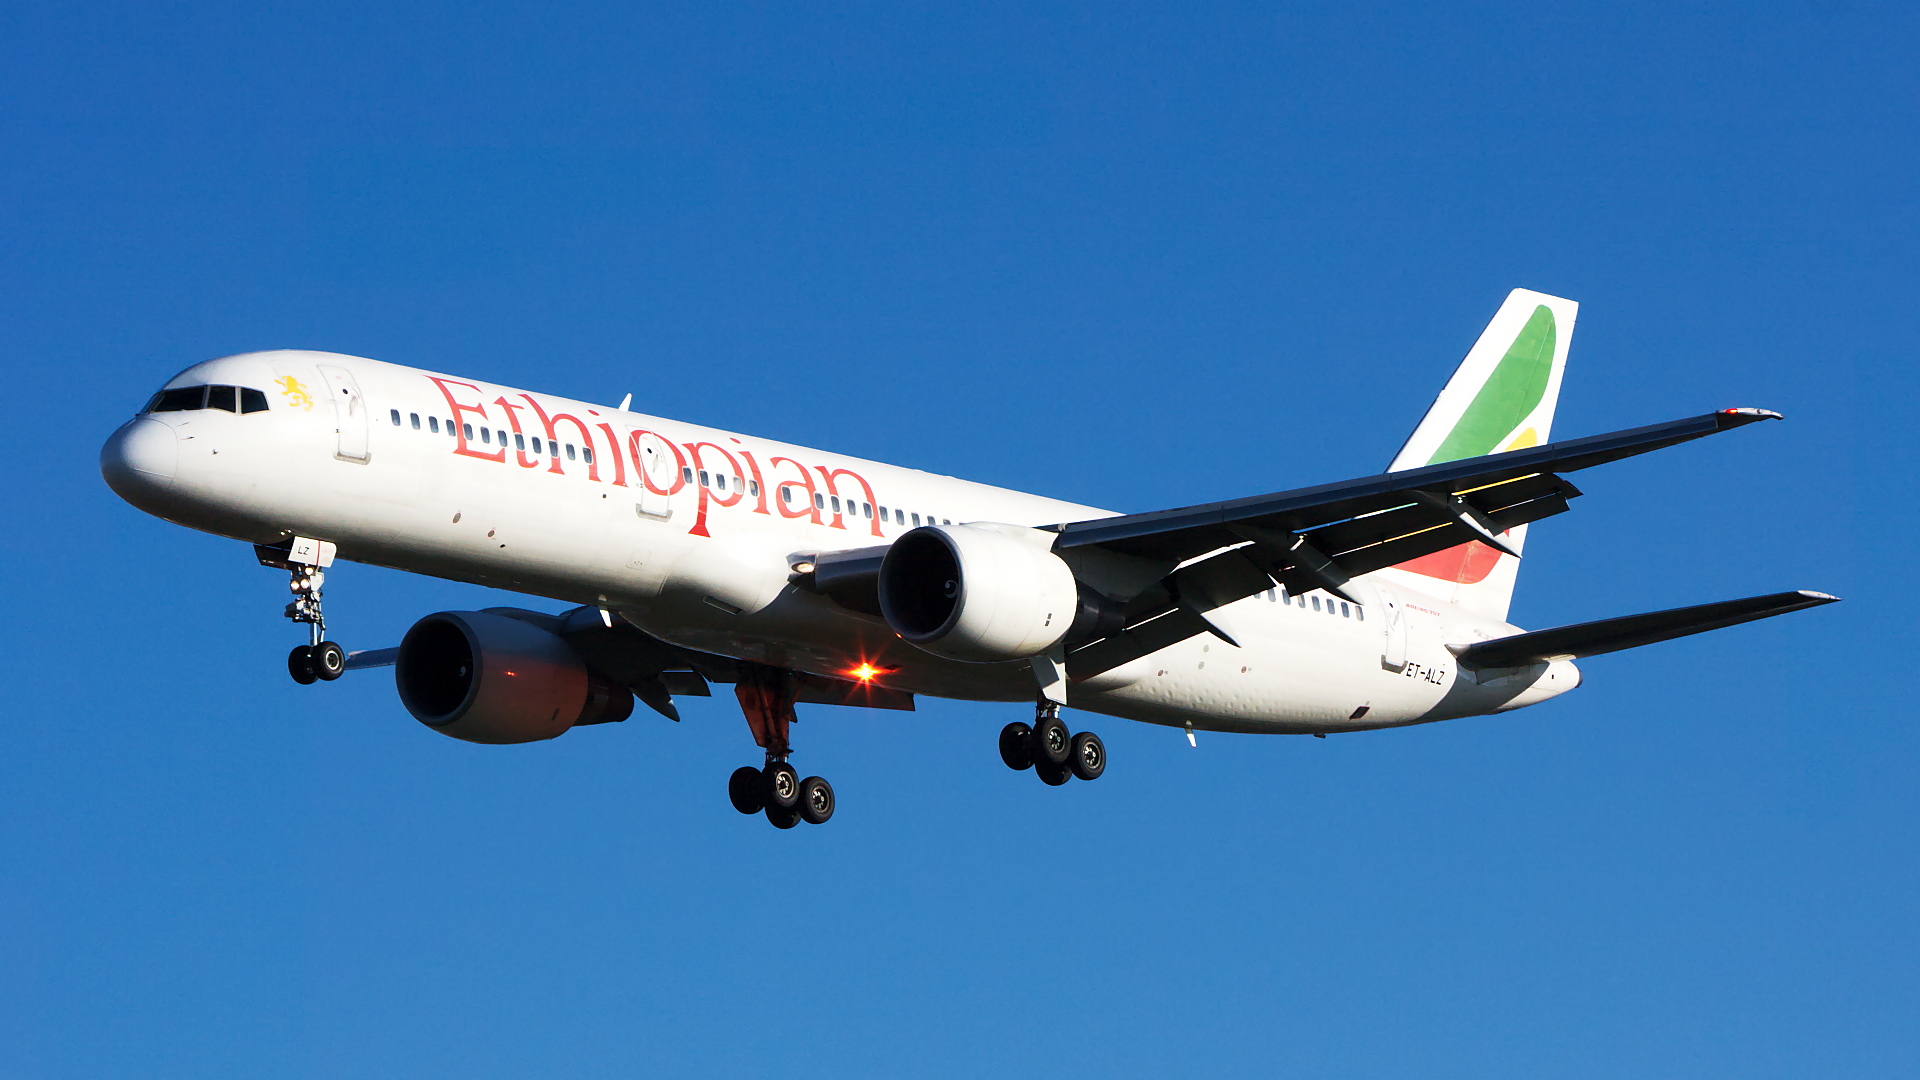 ET-ALZ ✈ Ethiopian Airlines Boeing 757-231 @ London-Heathrow